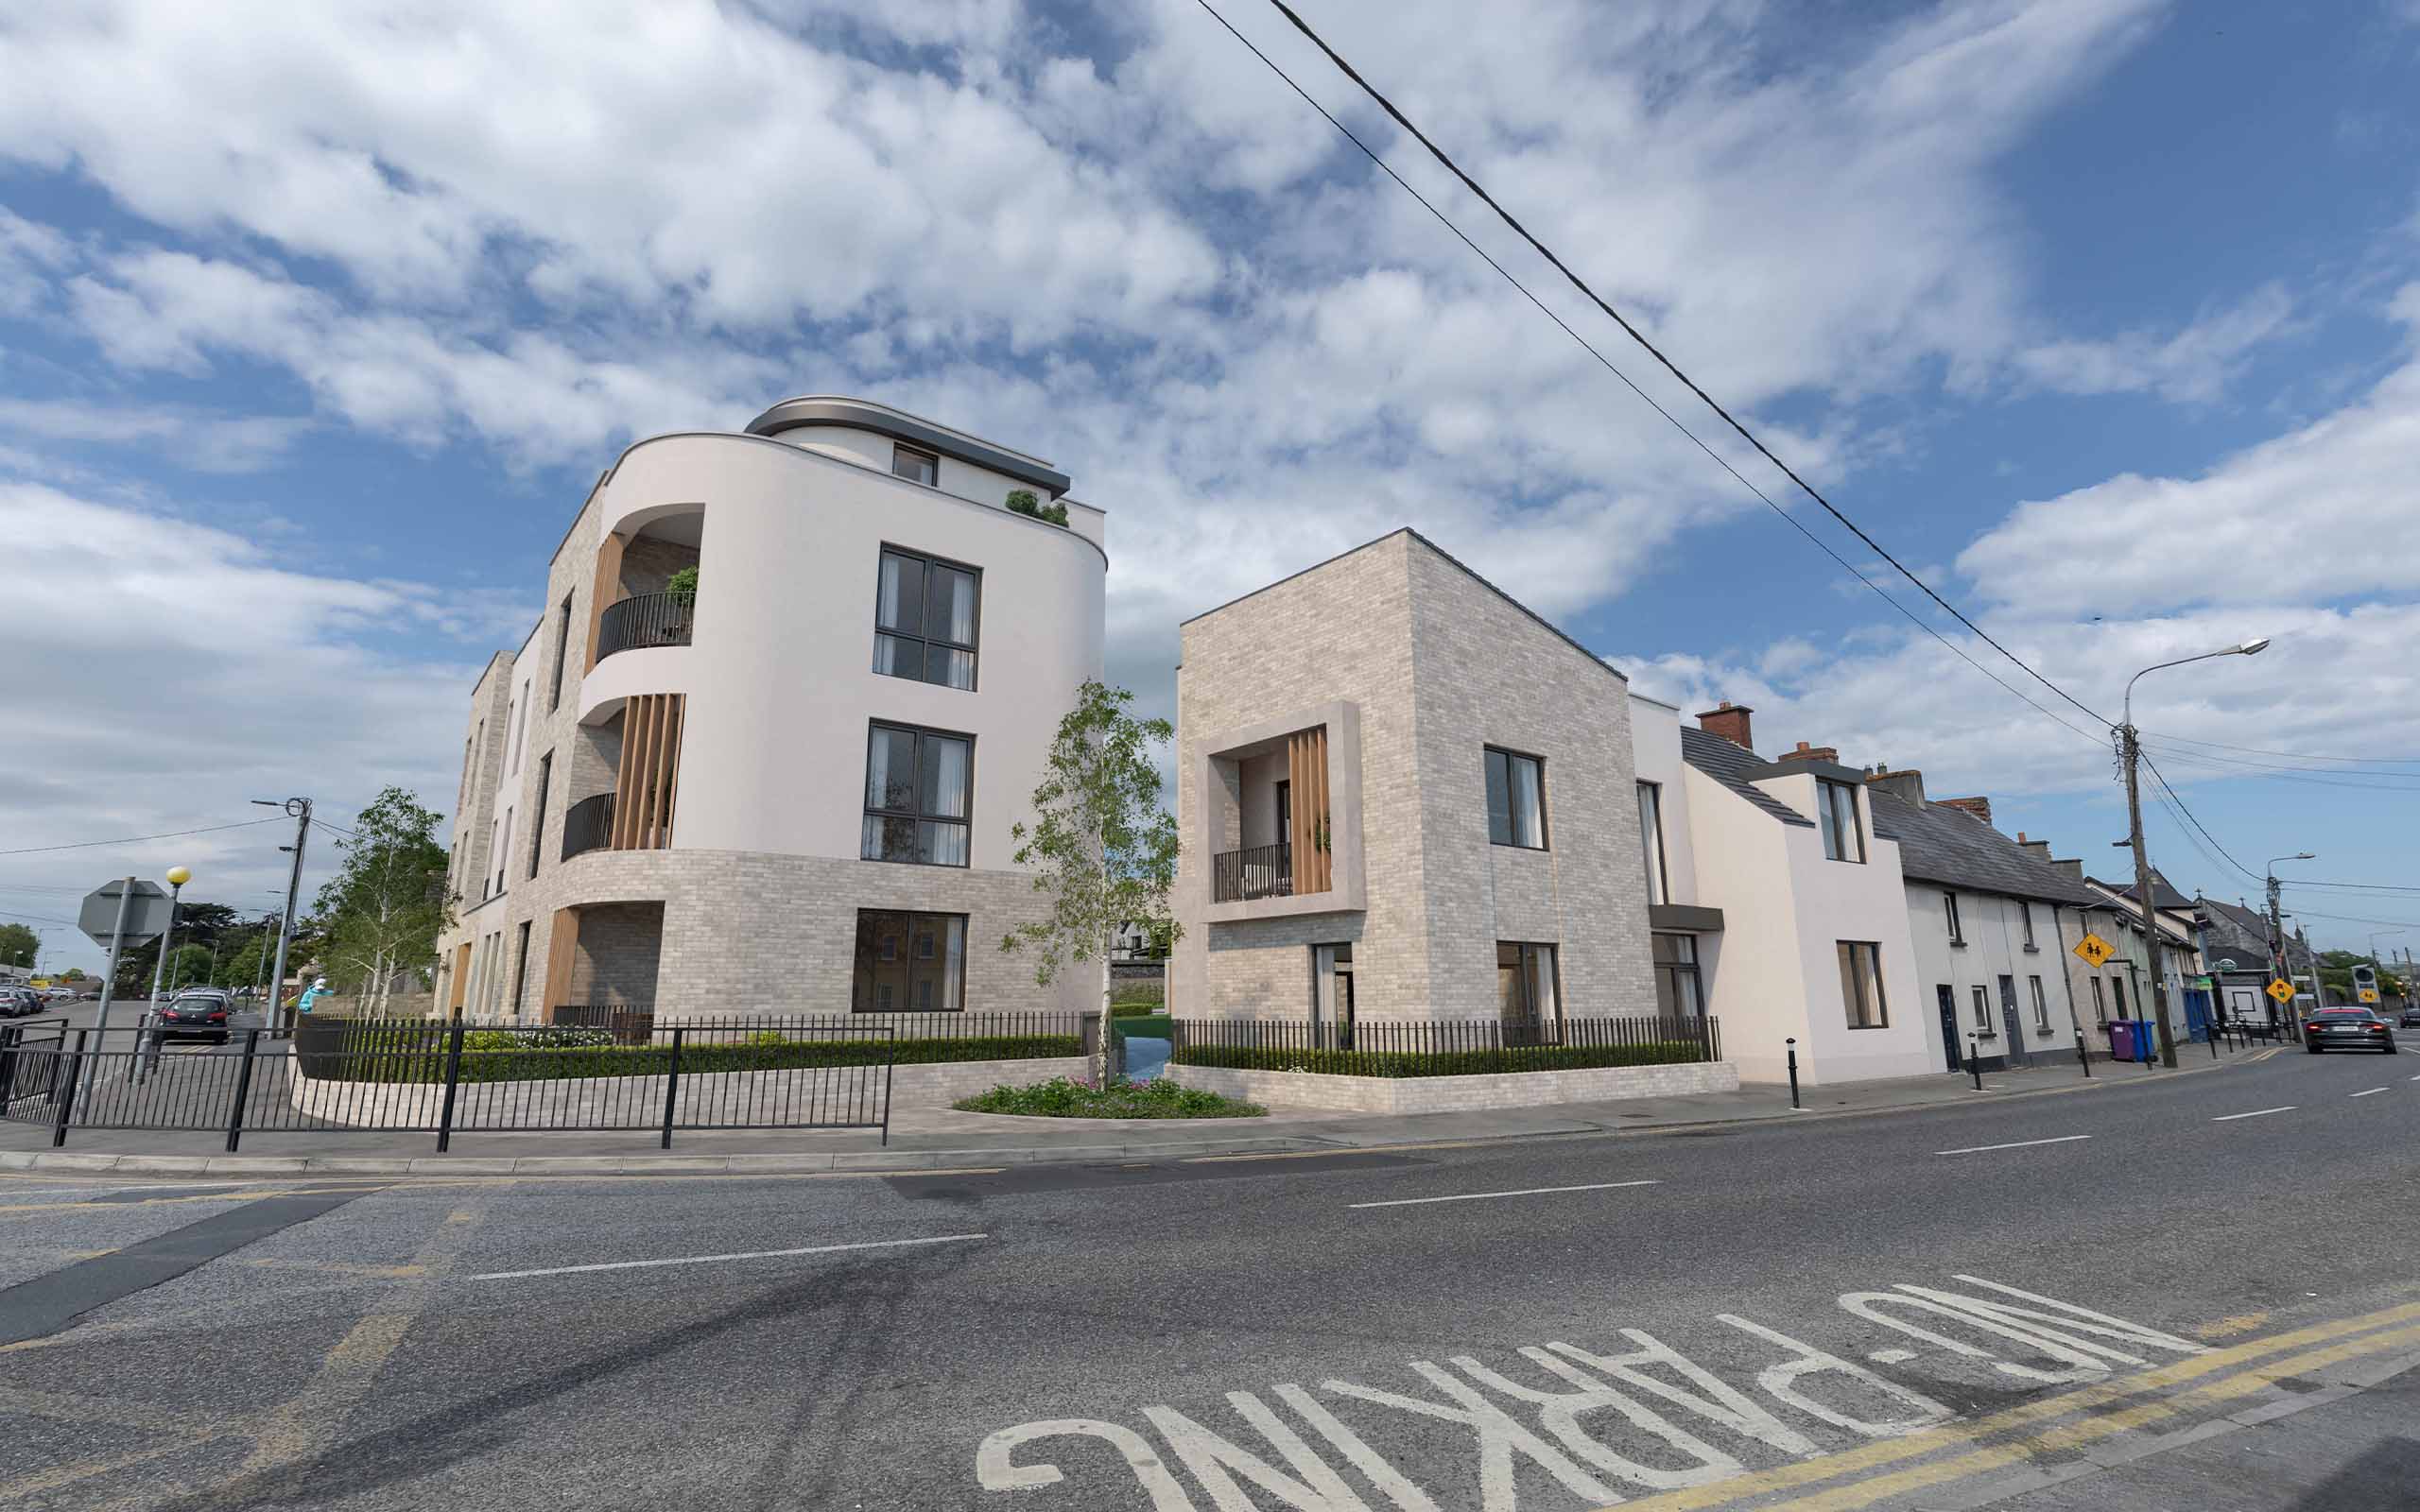 Architectural CGI of Residential Development in Kilkenny